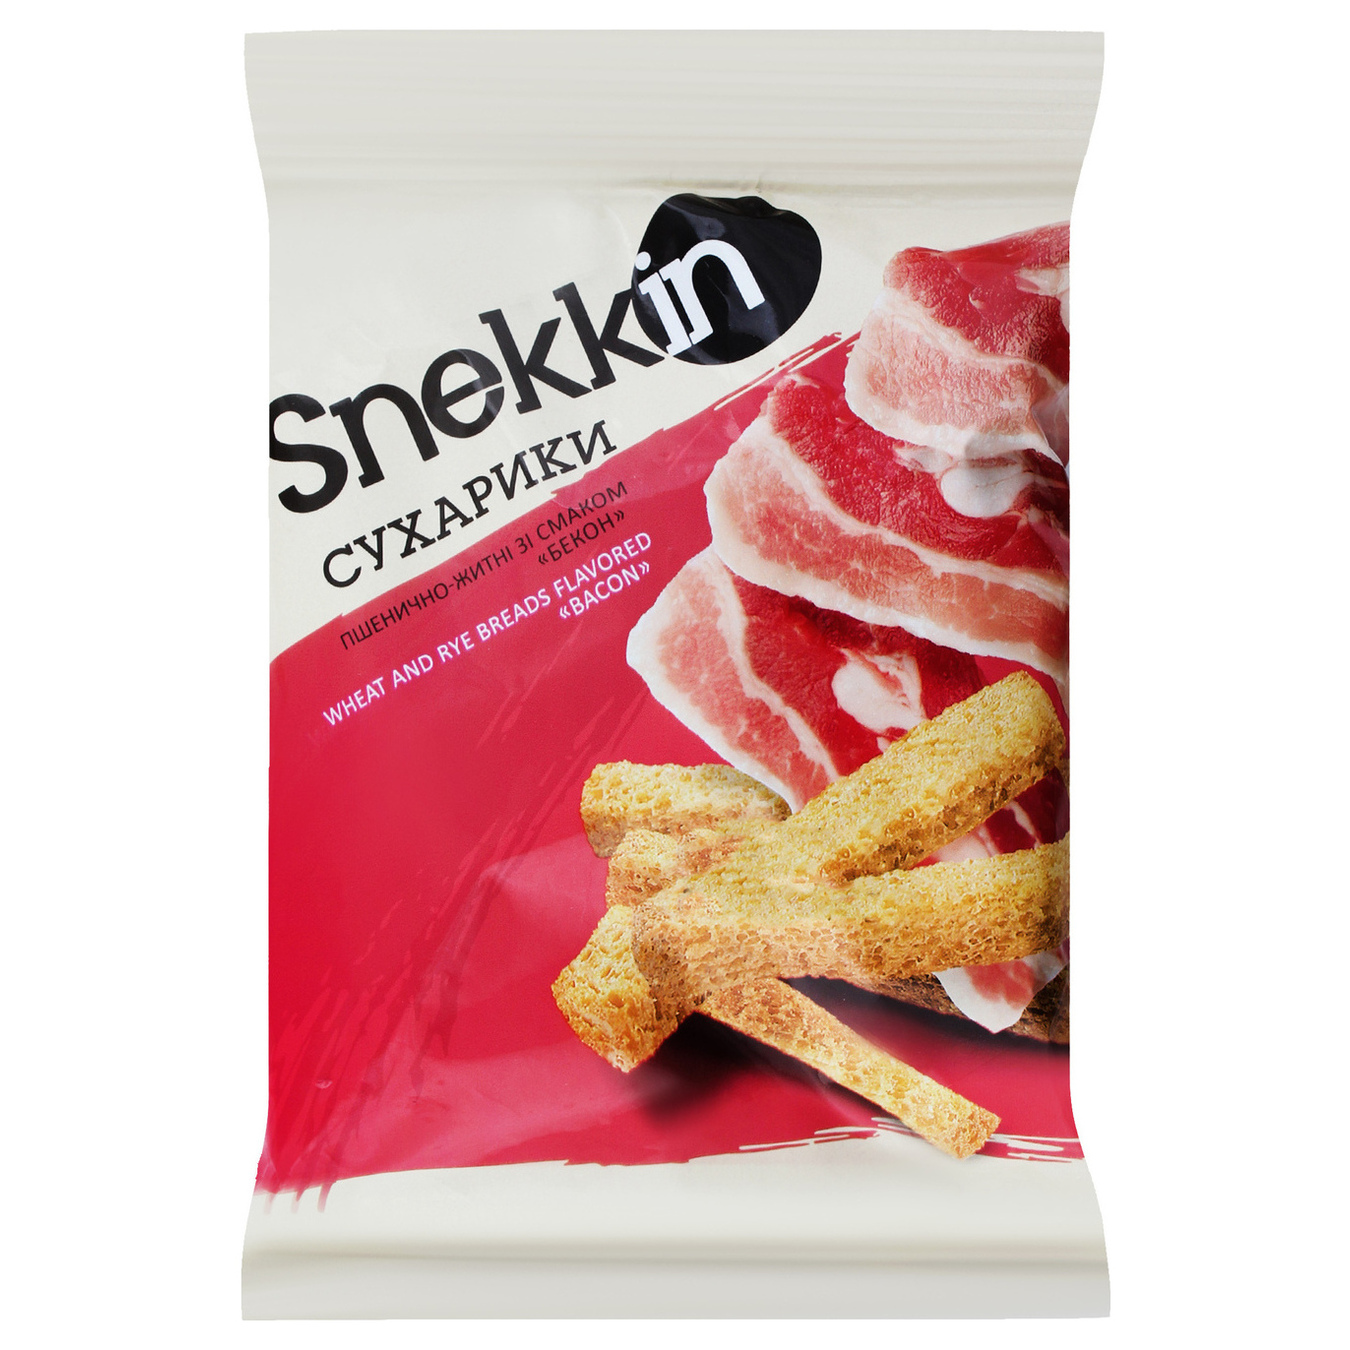 Snekkin wheat-rye crackers with Bacon flavor 70g